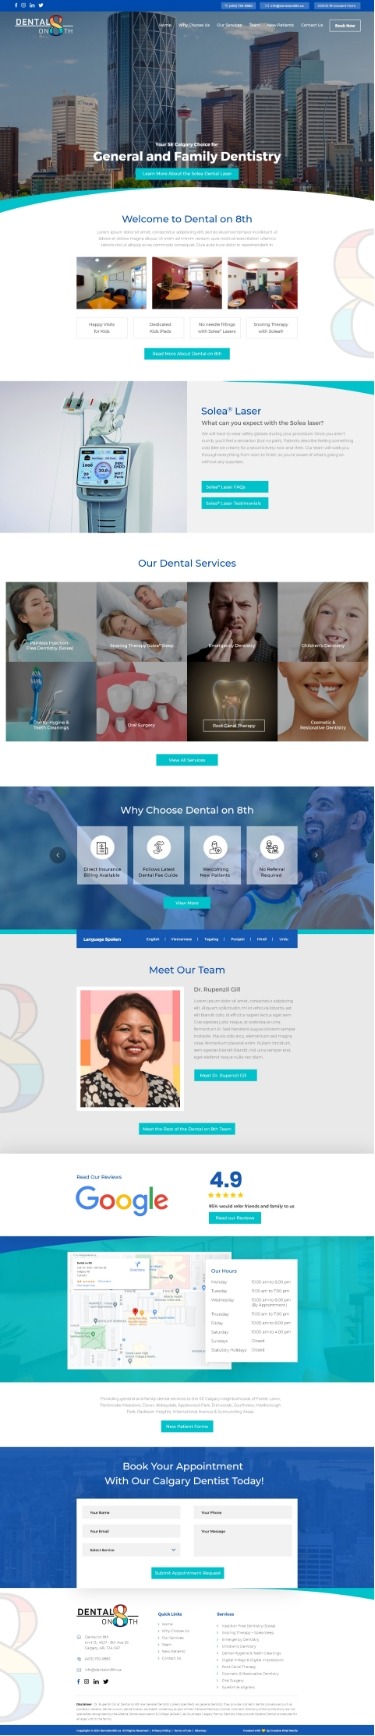 Dental on 8th Homepage | Creative Pixel Media | Dental Marketing & Website Design | Calgary & North America